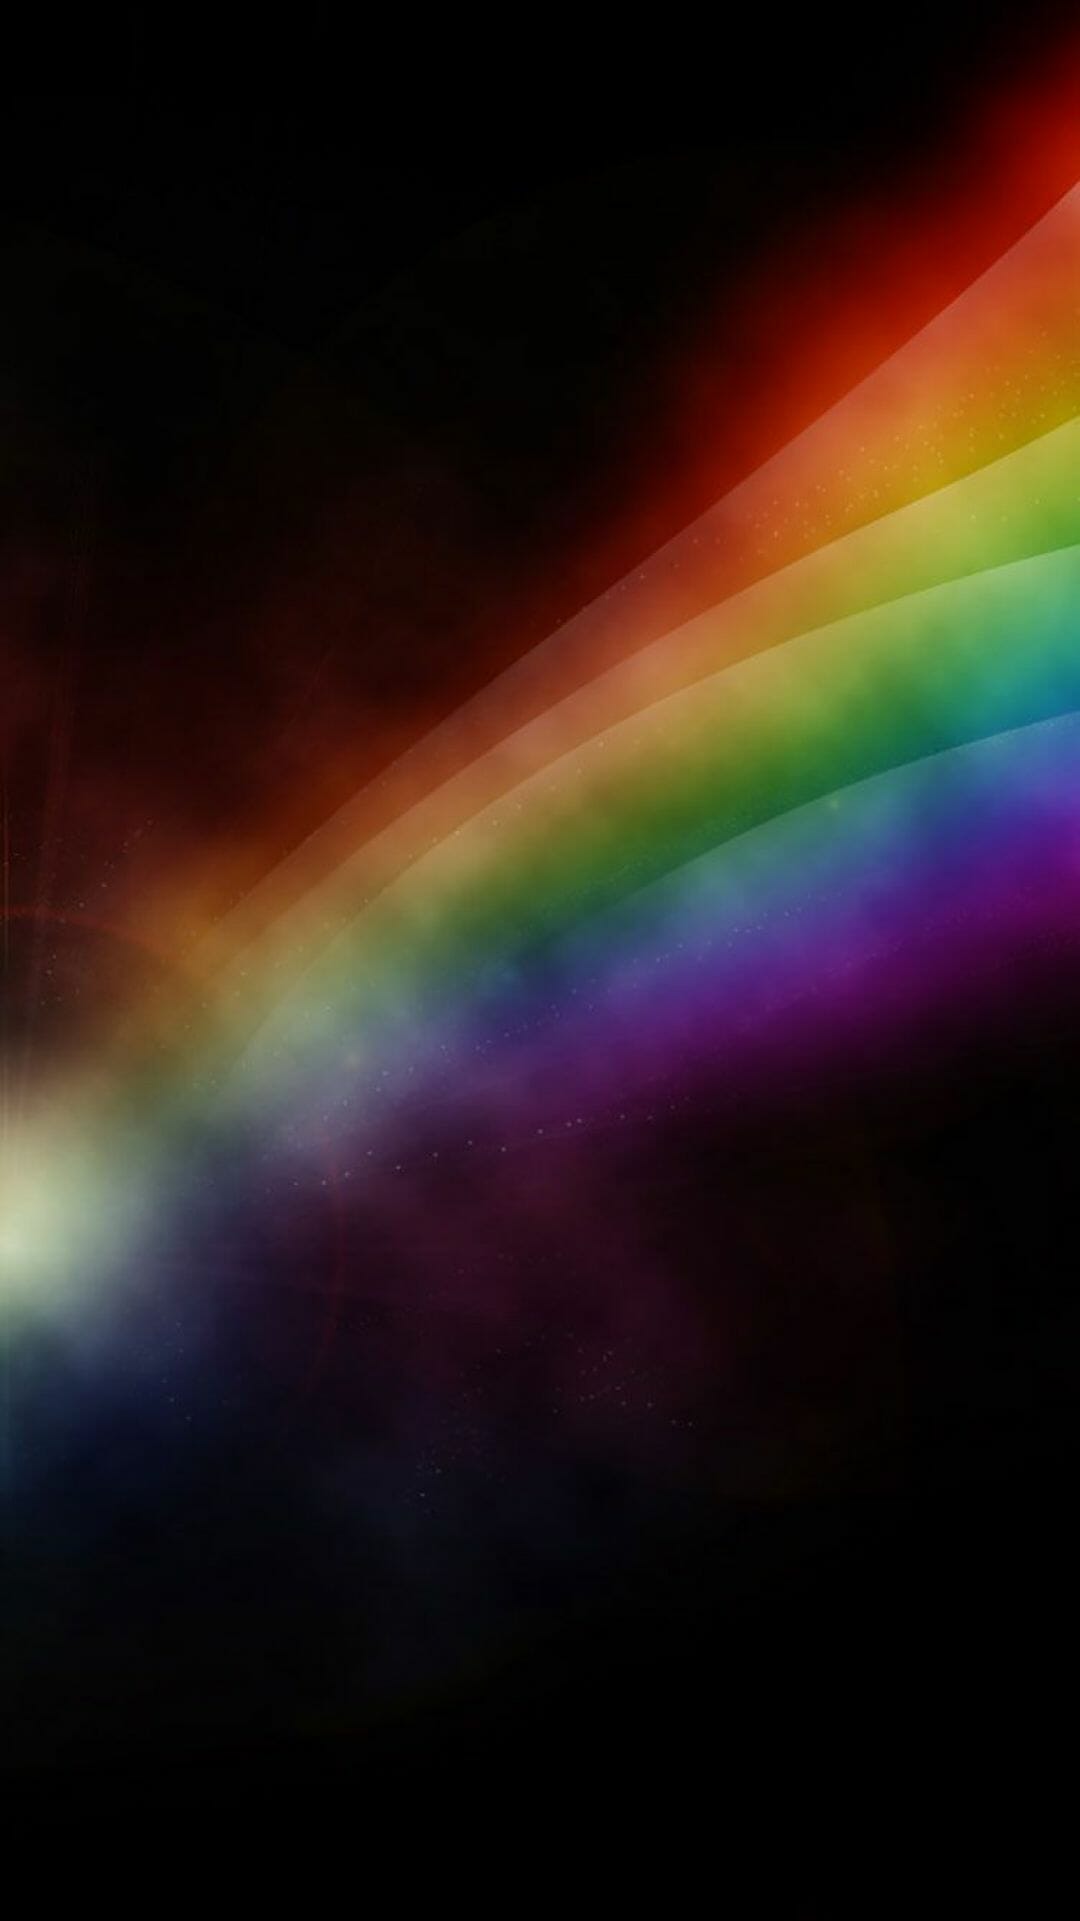 A rainbow is shining through the night sky - Rainbows